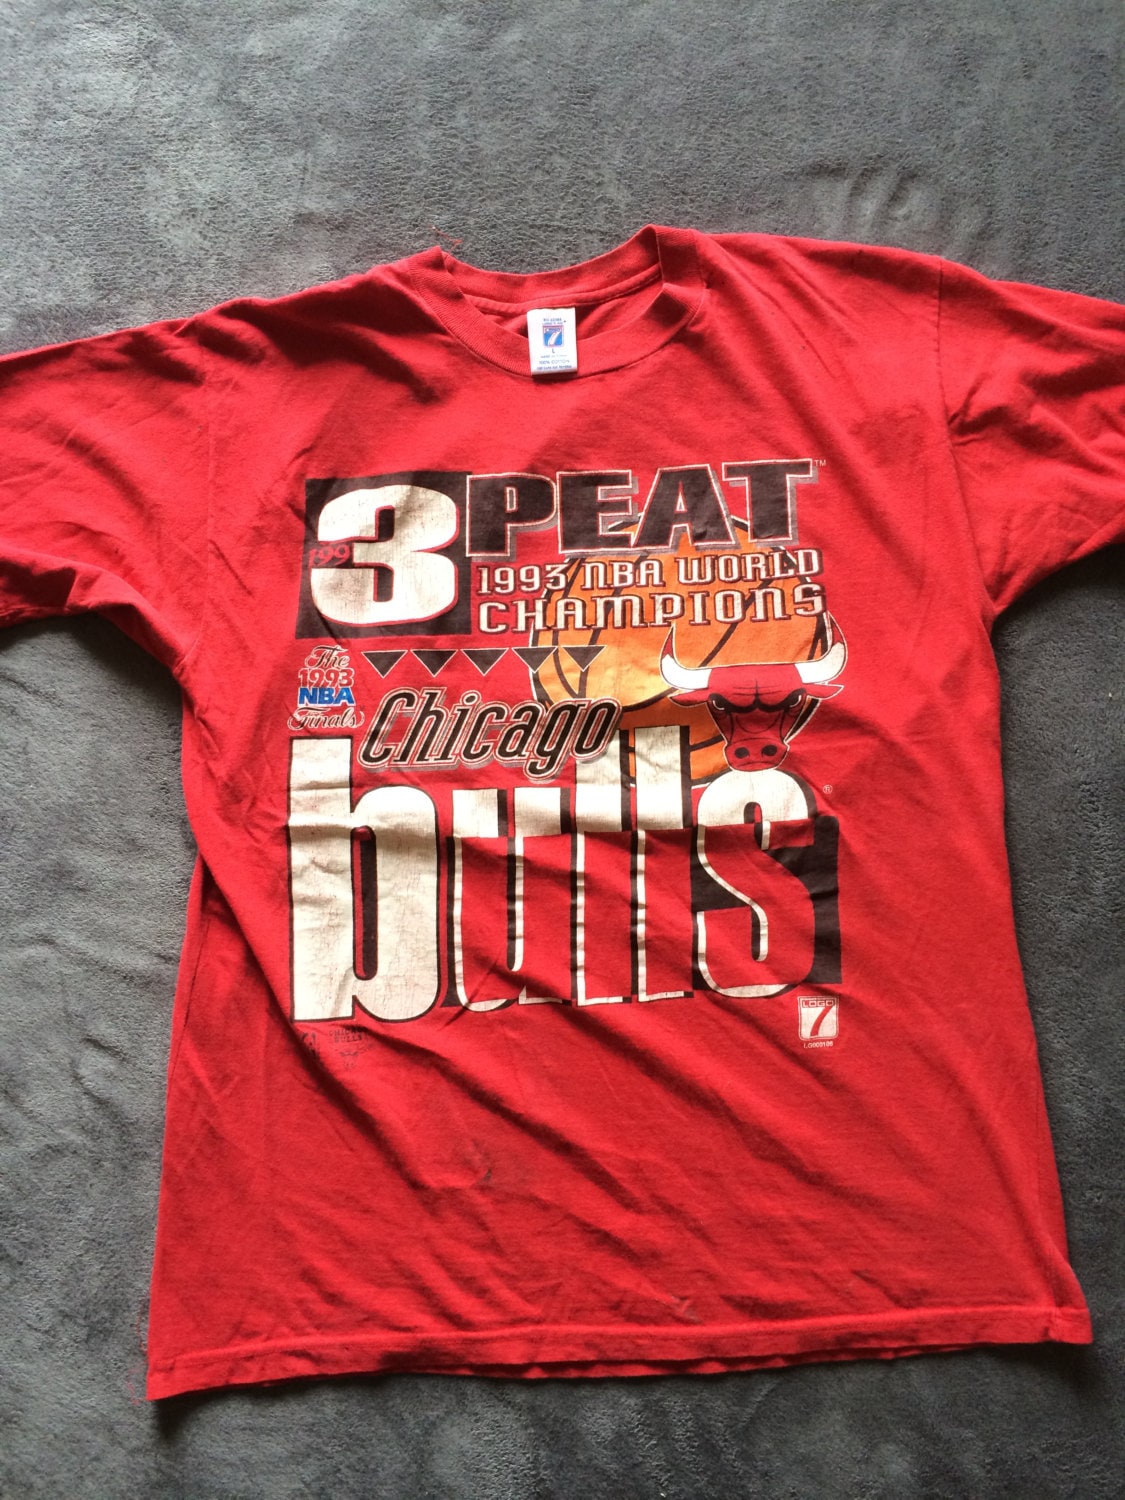 Vintage Chicago Bulls 3 Peat Logo 7 T-Shirt by VintageVanShop